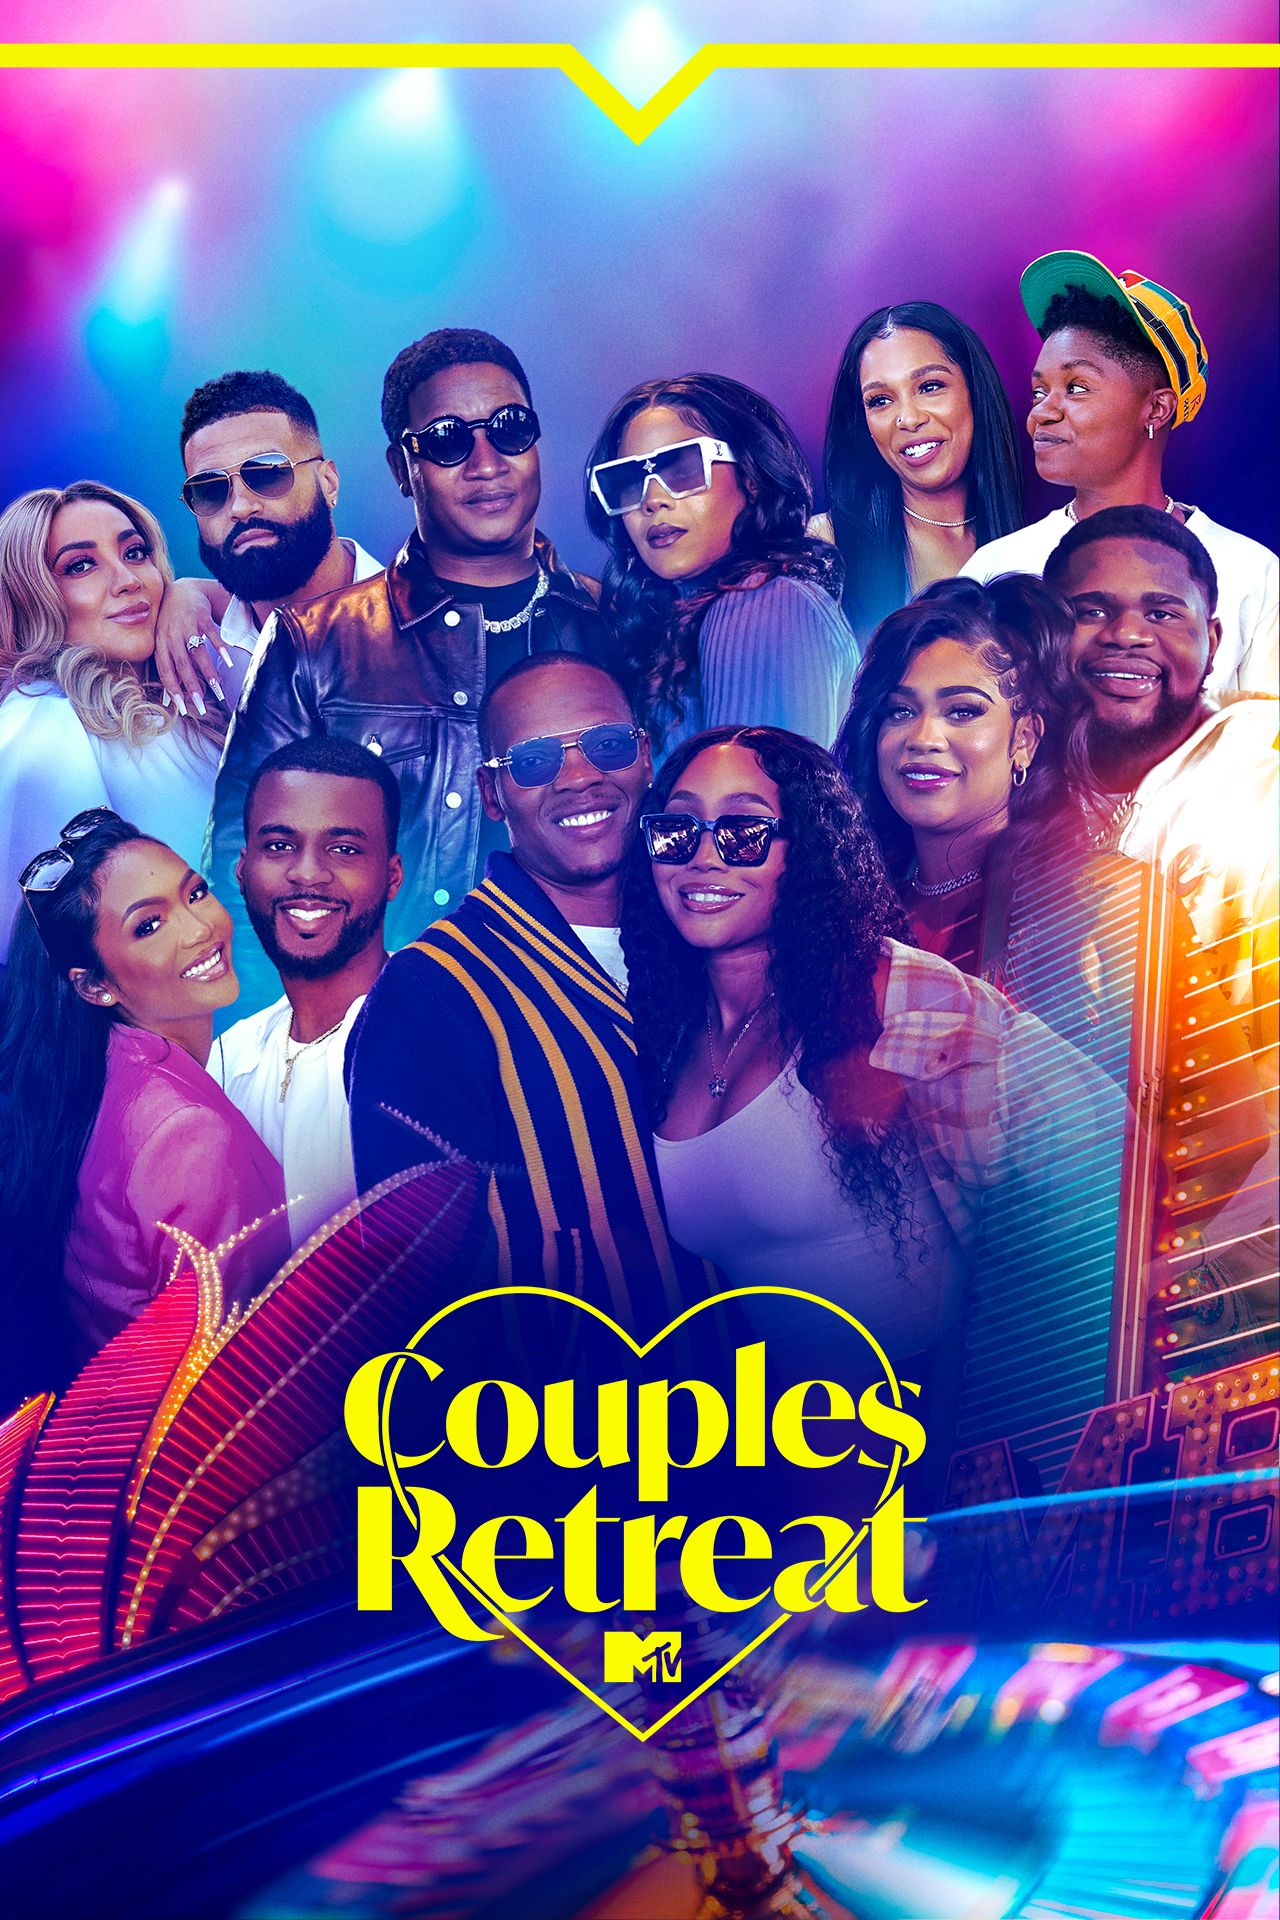 MTV Couples Retreat image